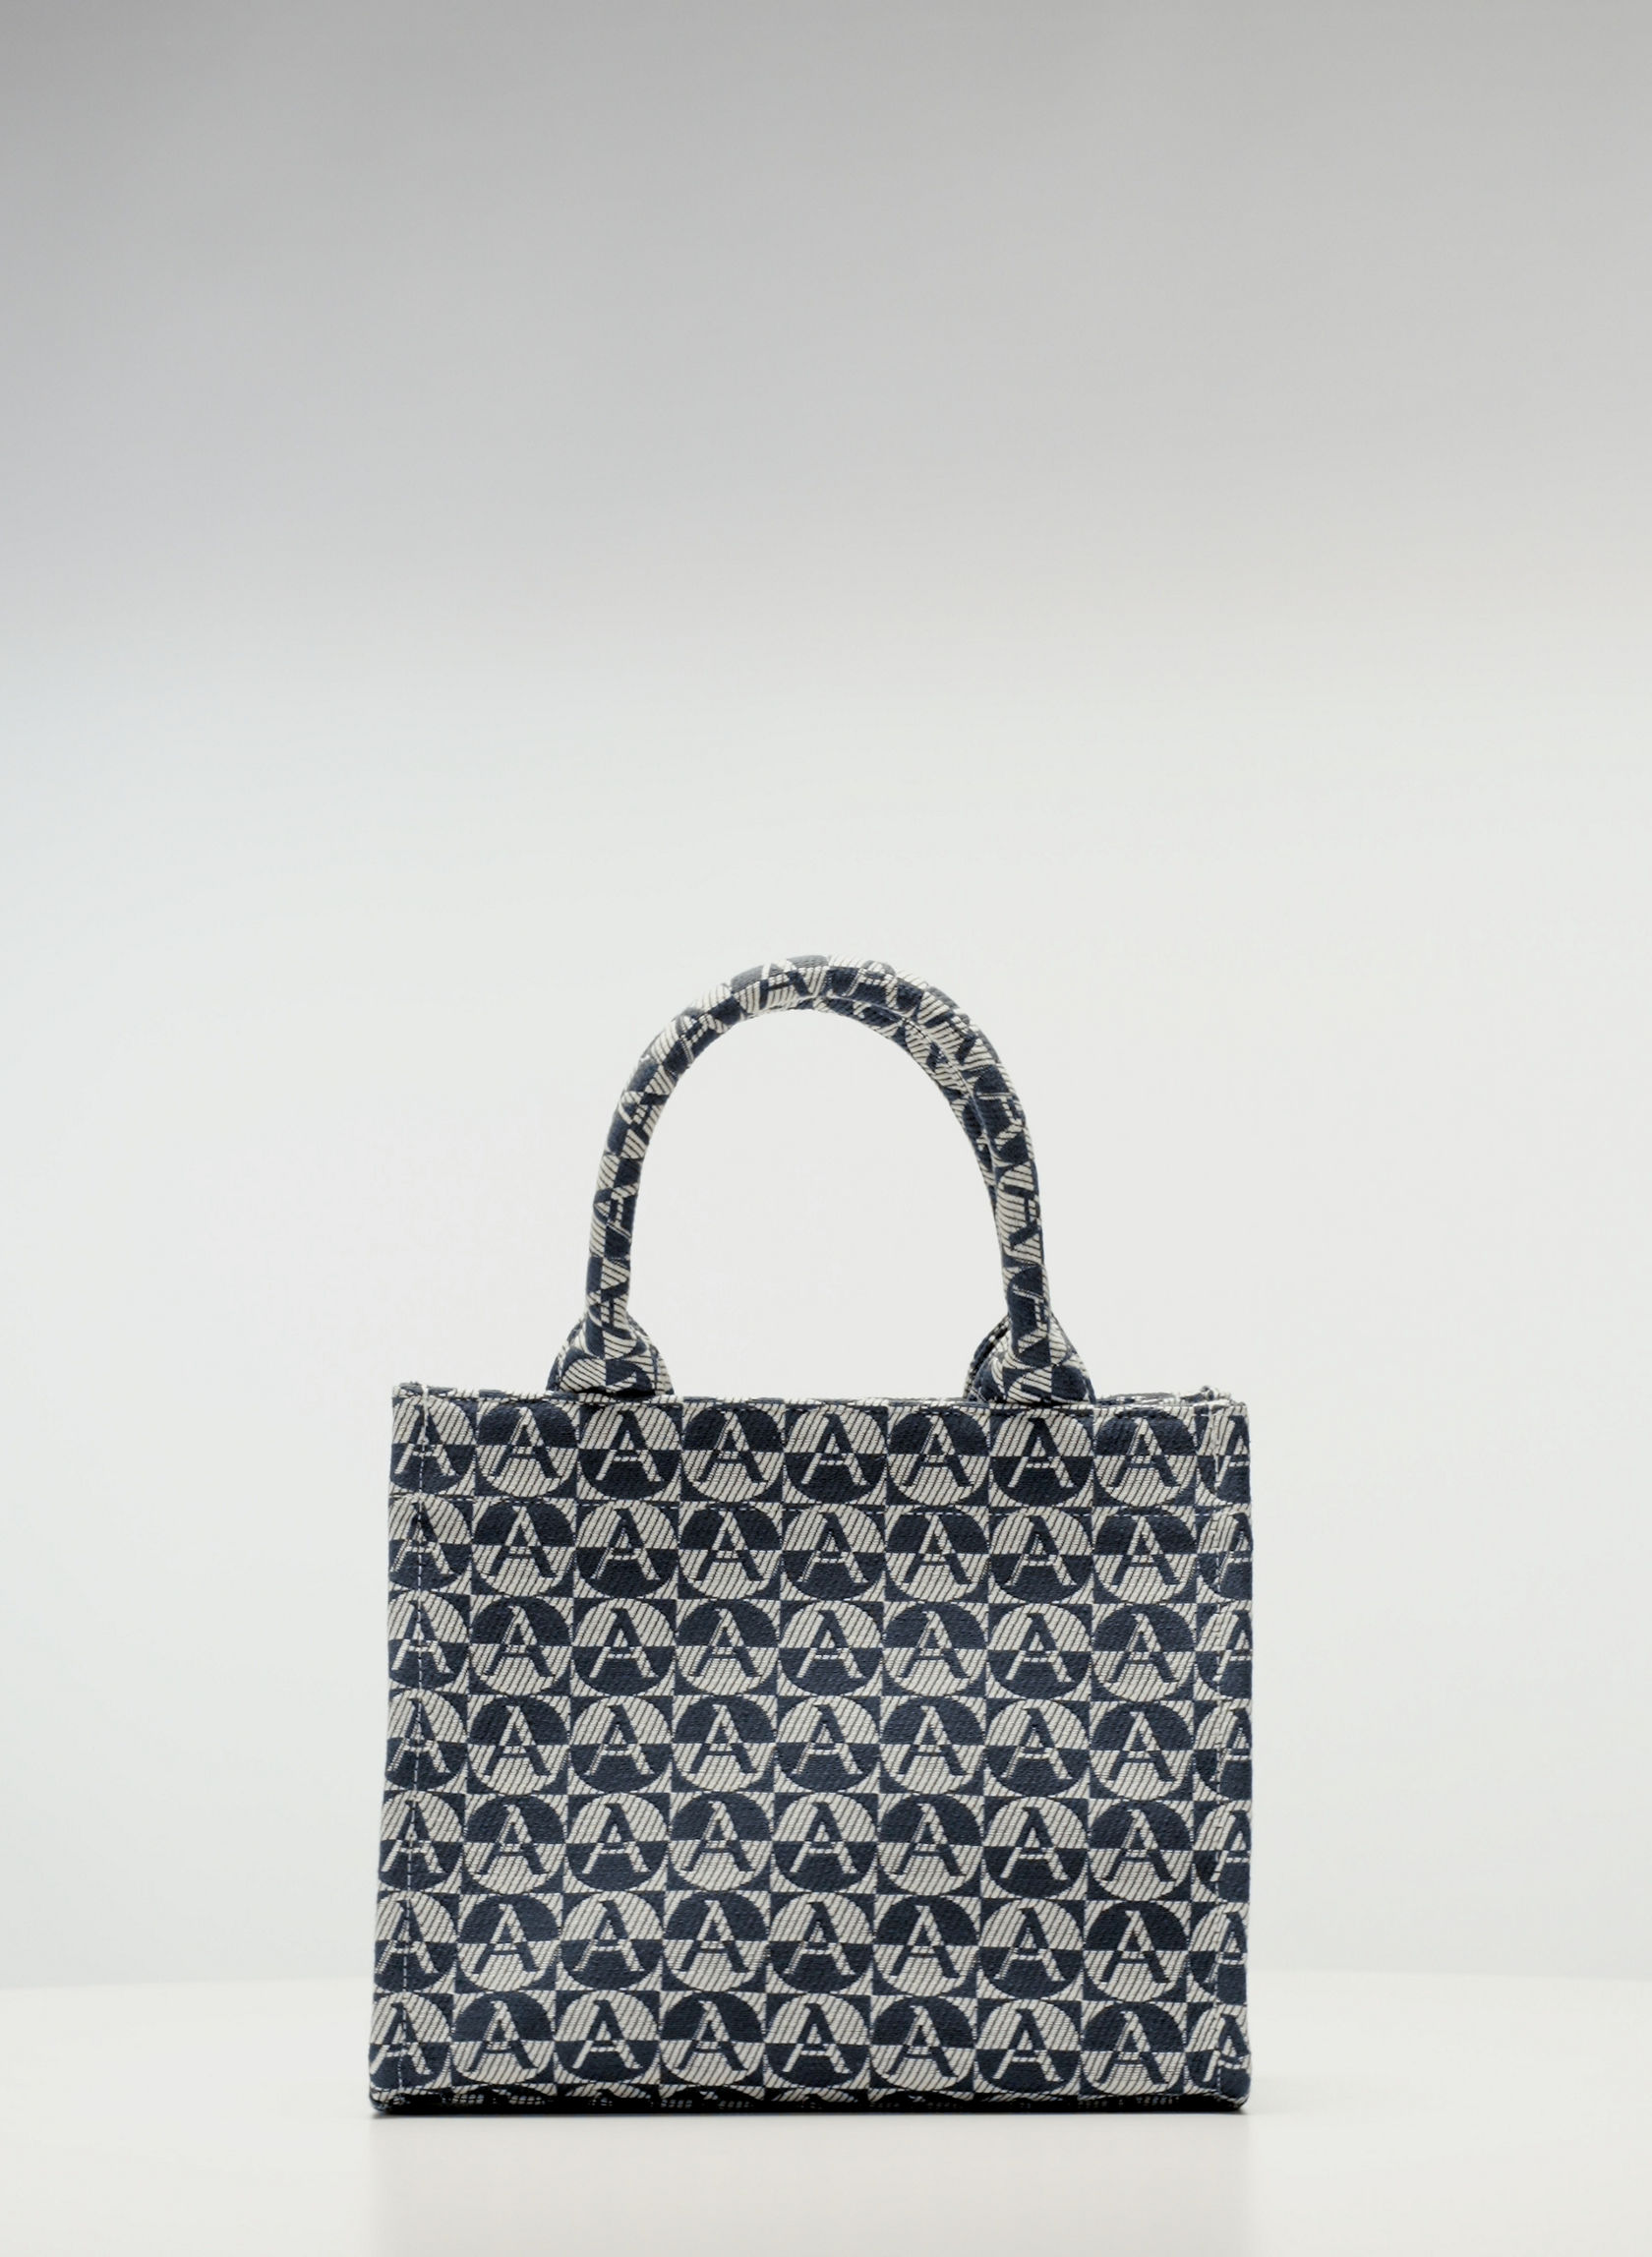 H&M Jacquard Weave Animal LARGE Cotton Book Tote Handbag Bag Limited Edition